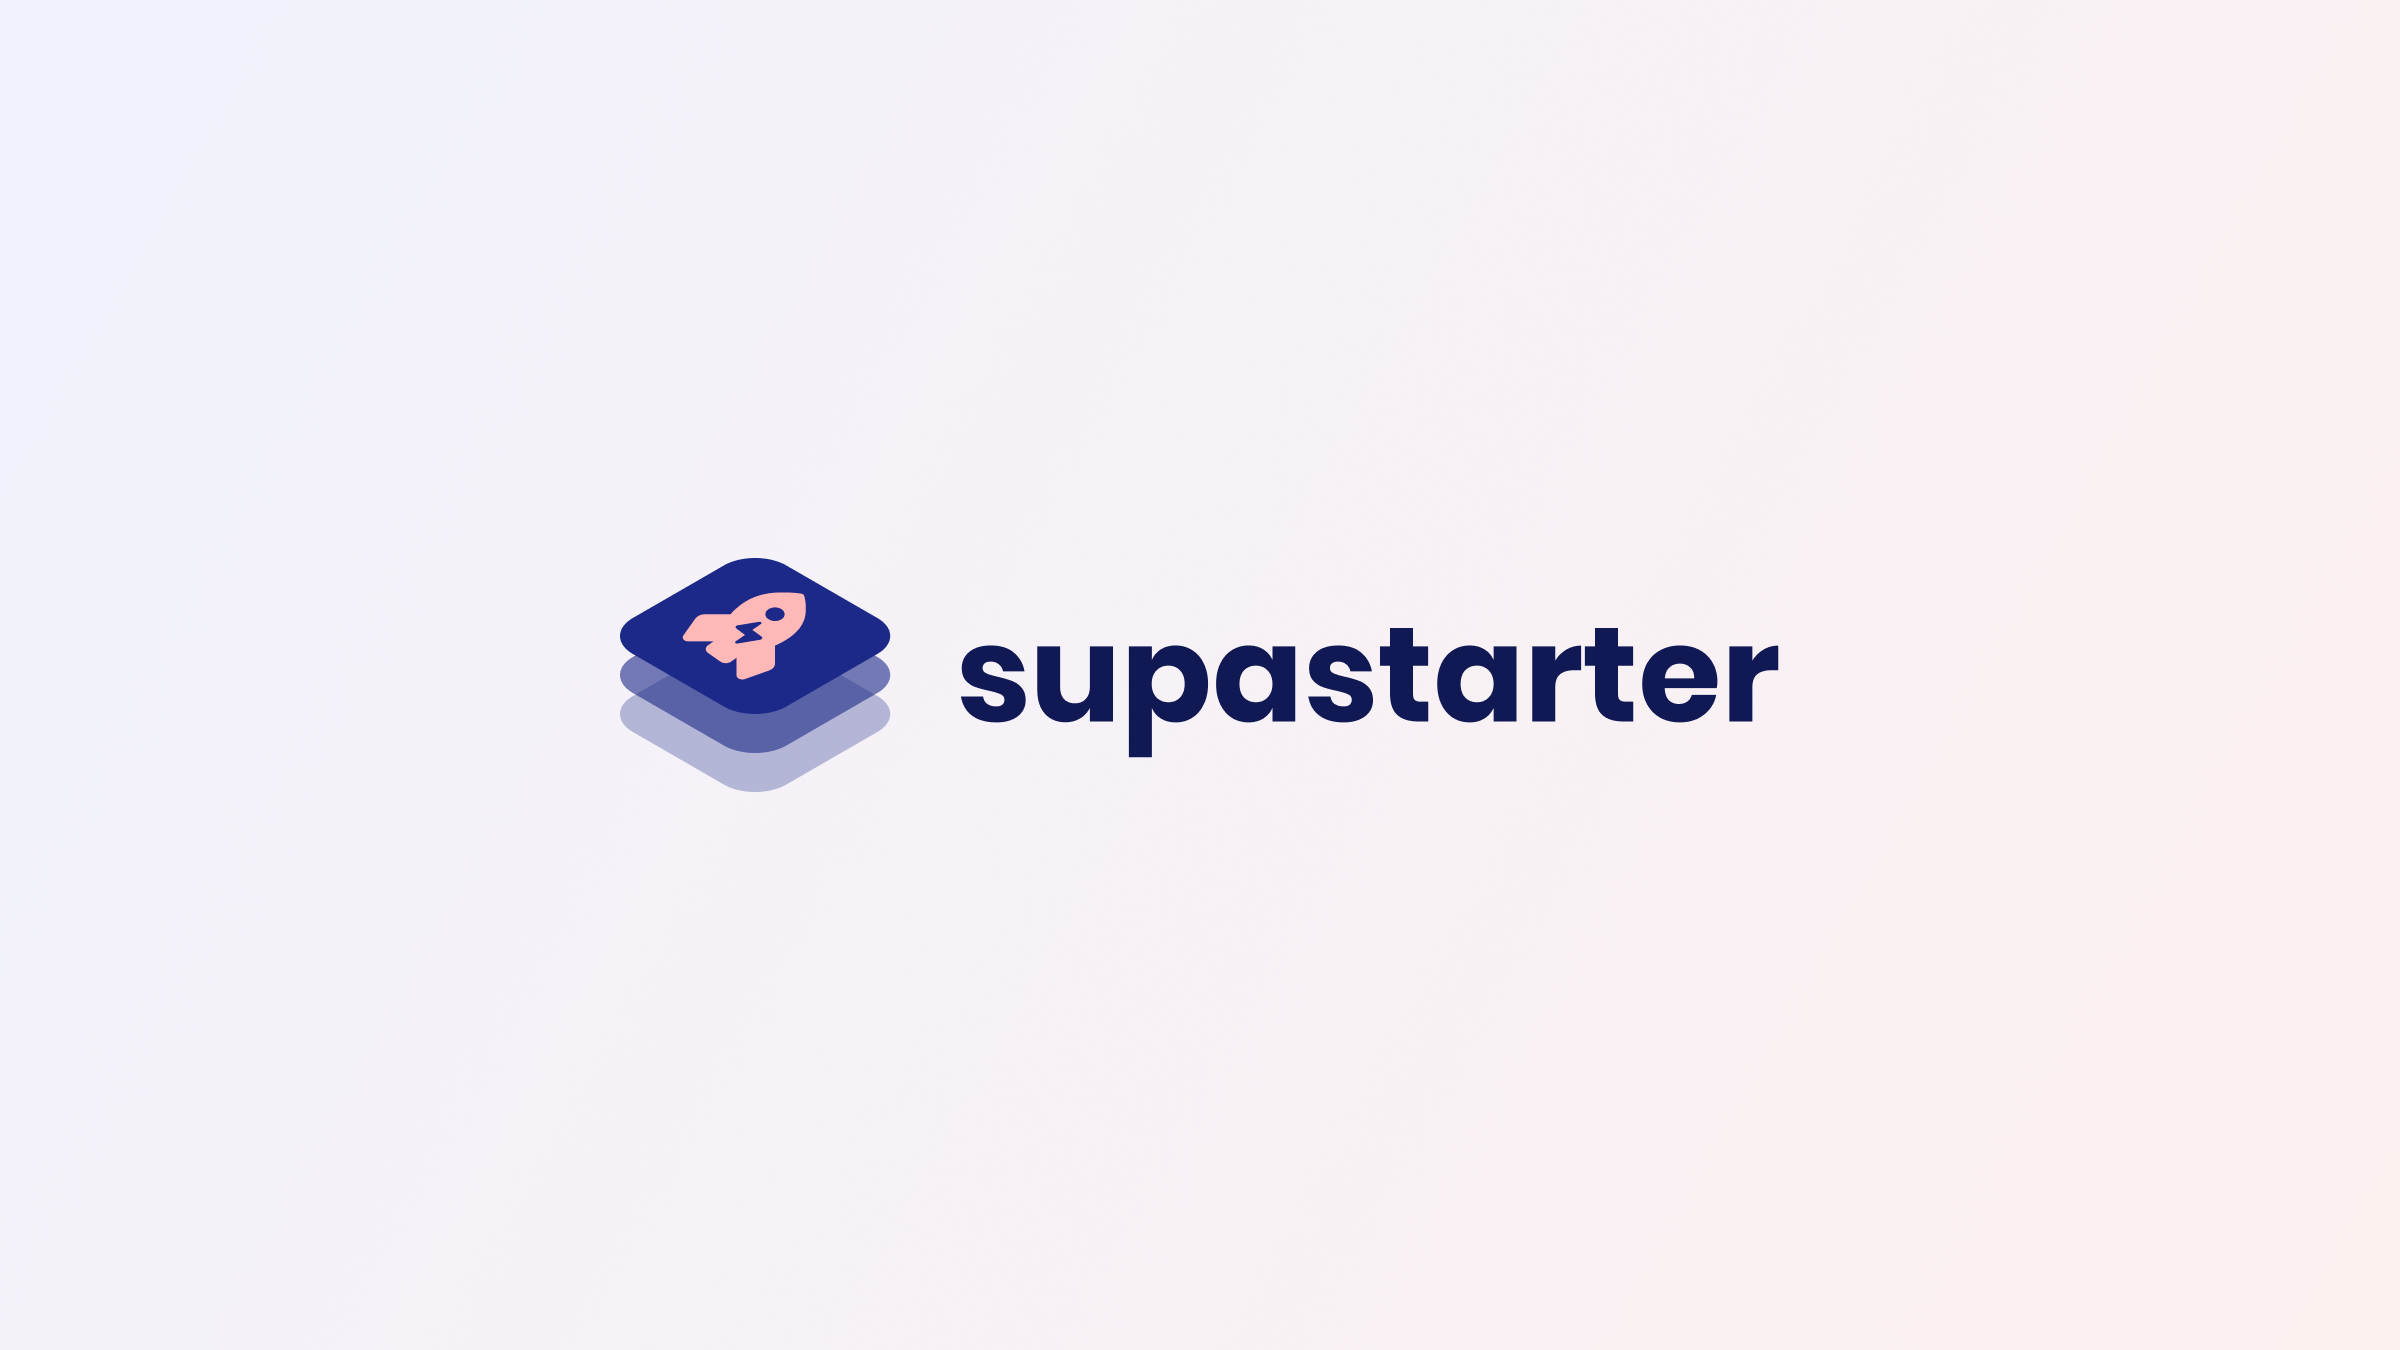 Welcome to the supastarter demo blog